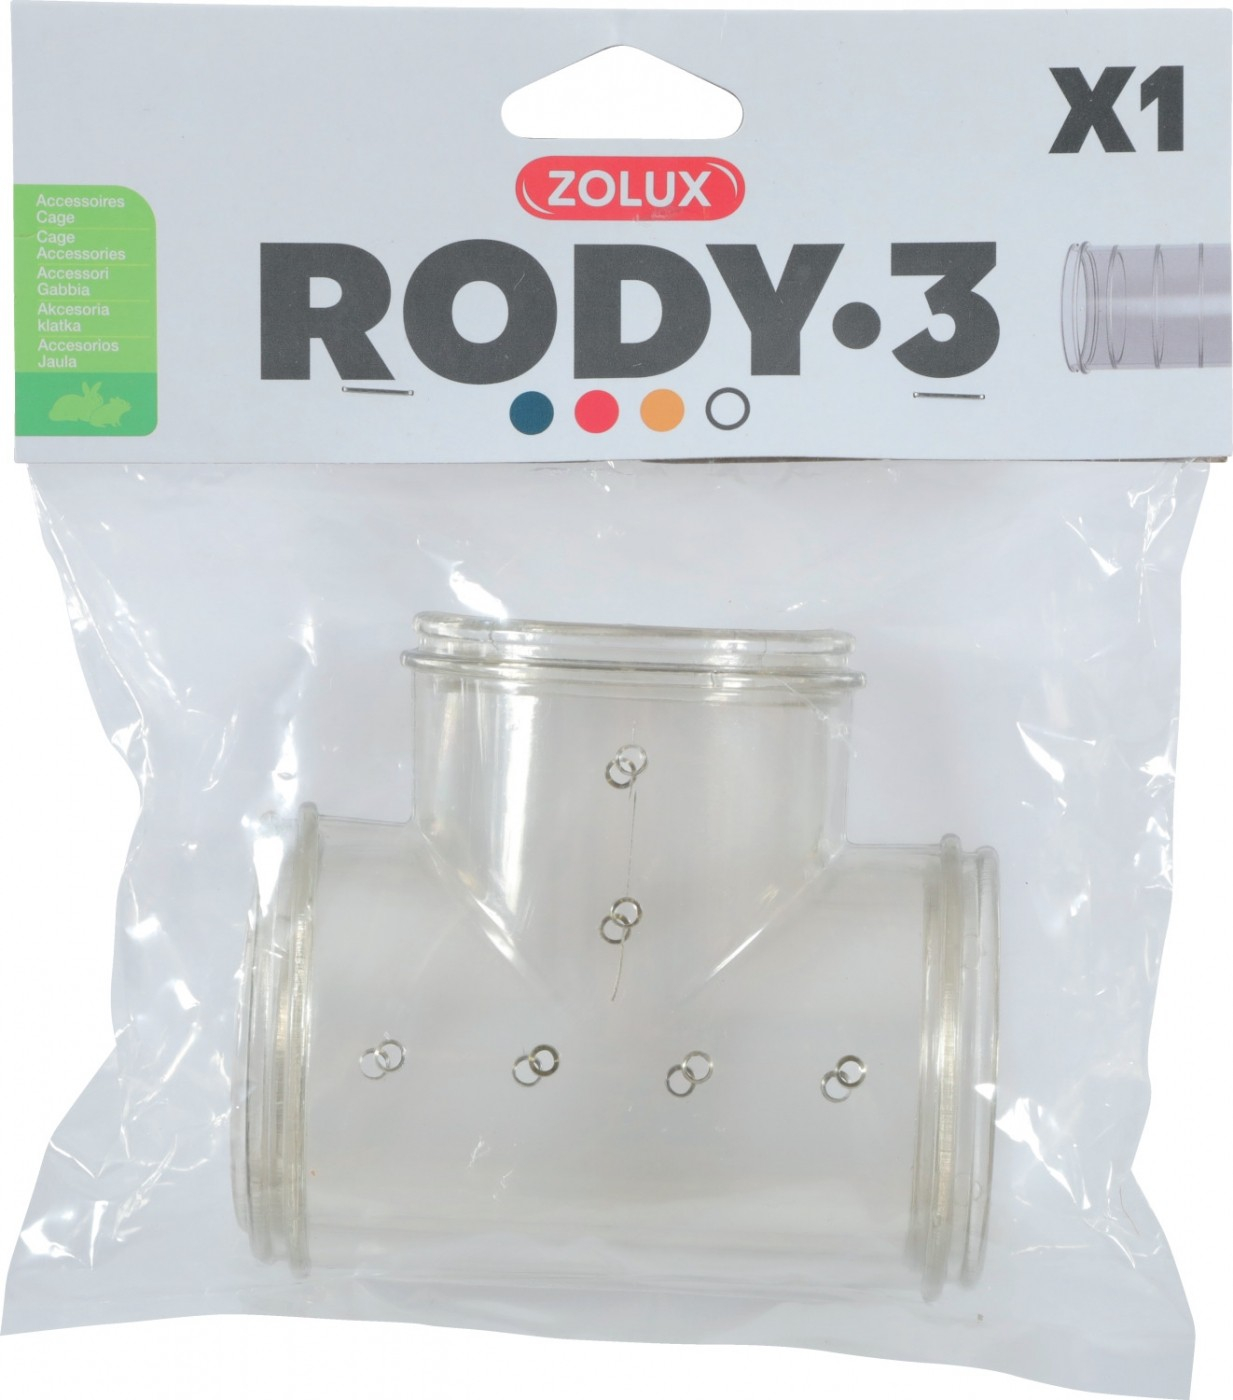 T-Rohr für Rody3 Käfige transparent grau